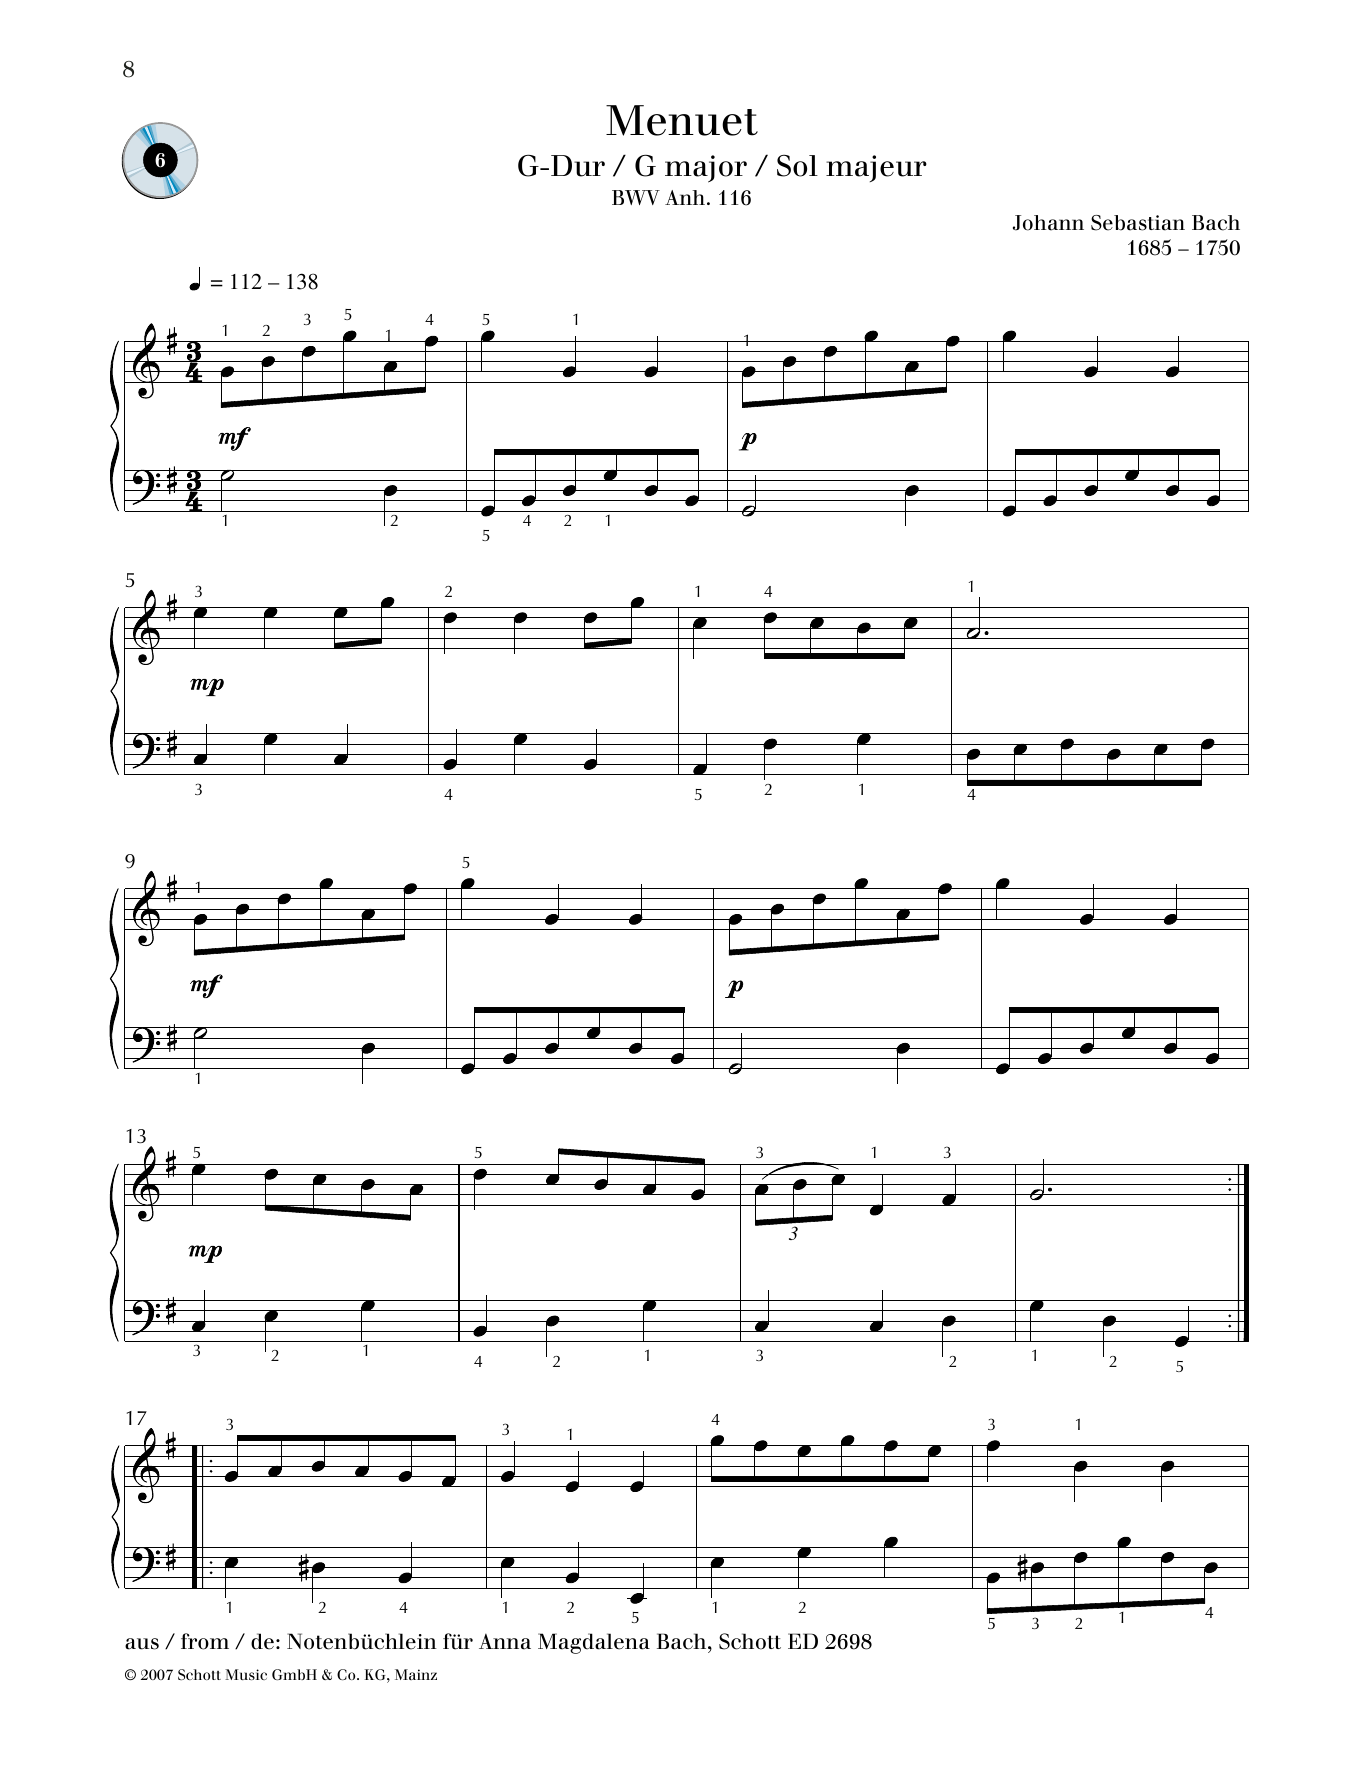 Johann Sebastian Bach Minuet G major Sheet Music Notes & Chords for Piano Solo - Download or Print PDF